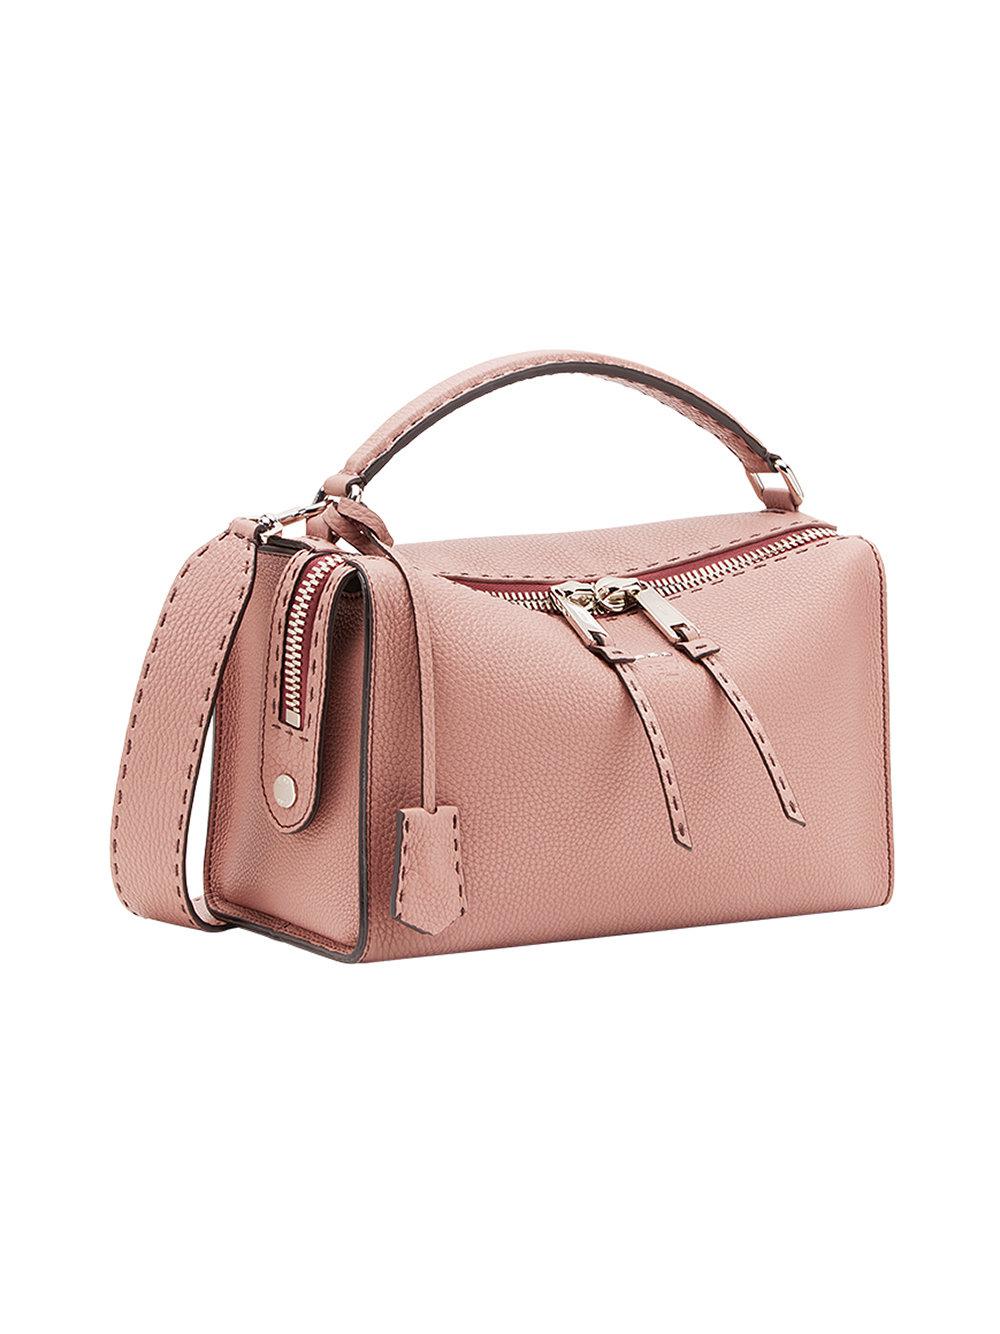 Fendi Leather Lei Selleria Tote Bag in Pink - Lyst